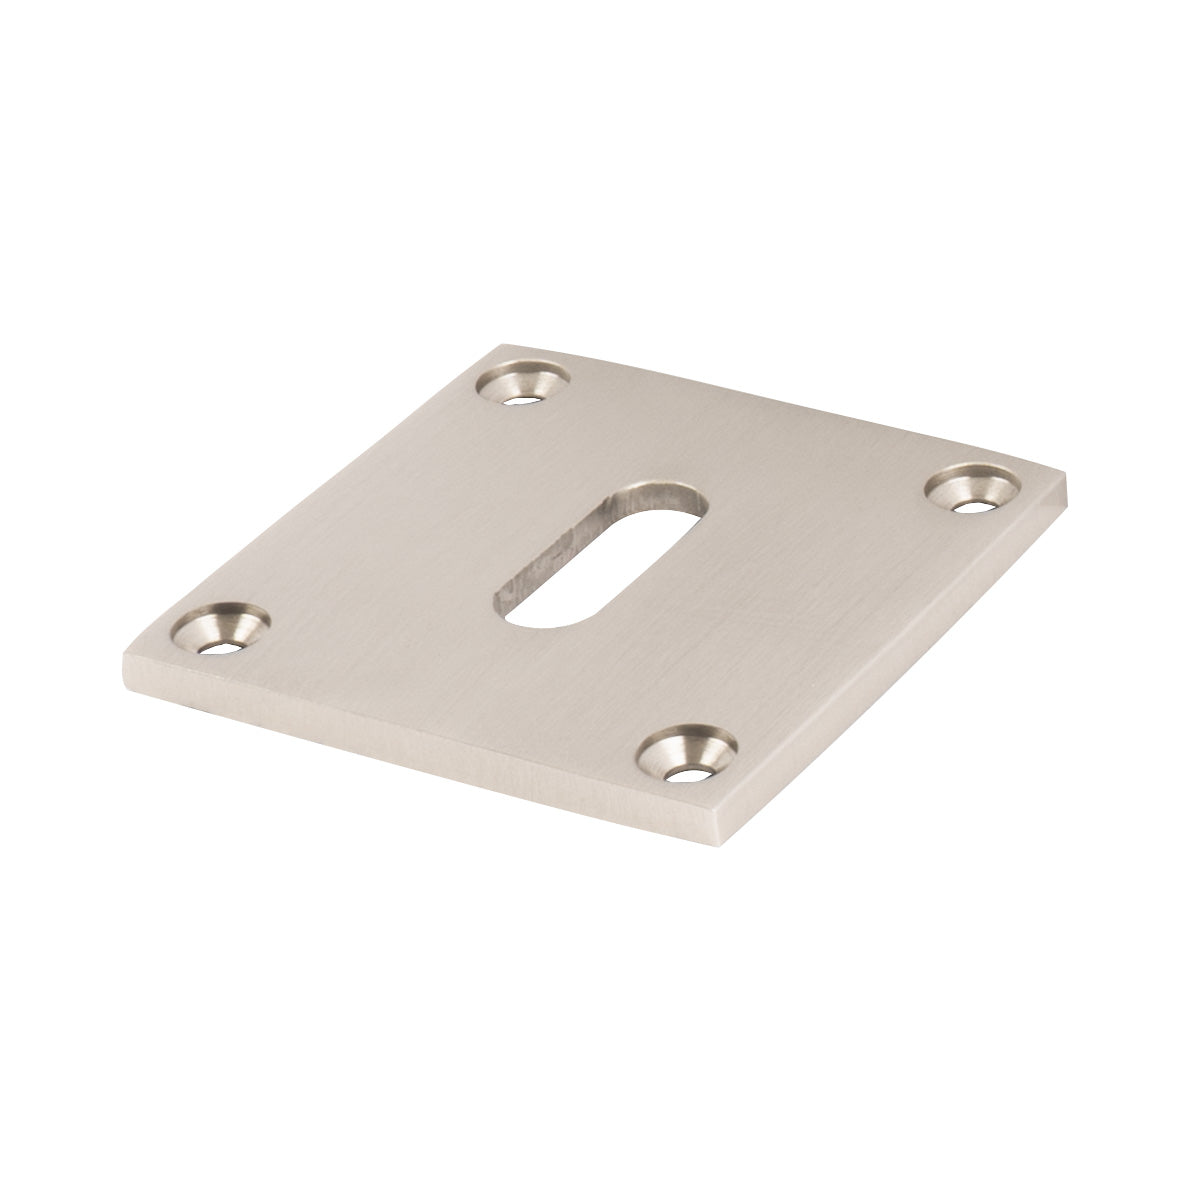 satin nickel square escutcheon low profile plate, British Standard keyhole cover plate SHOW